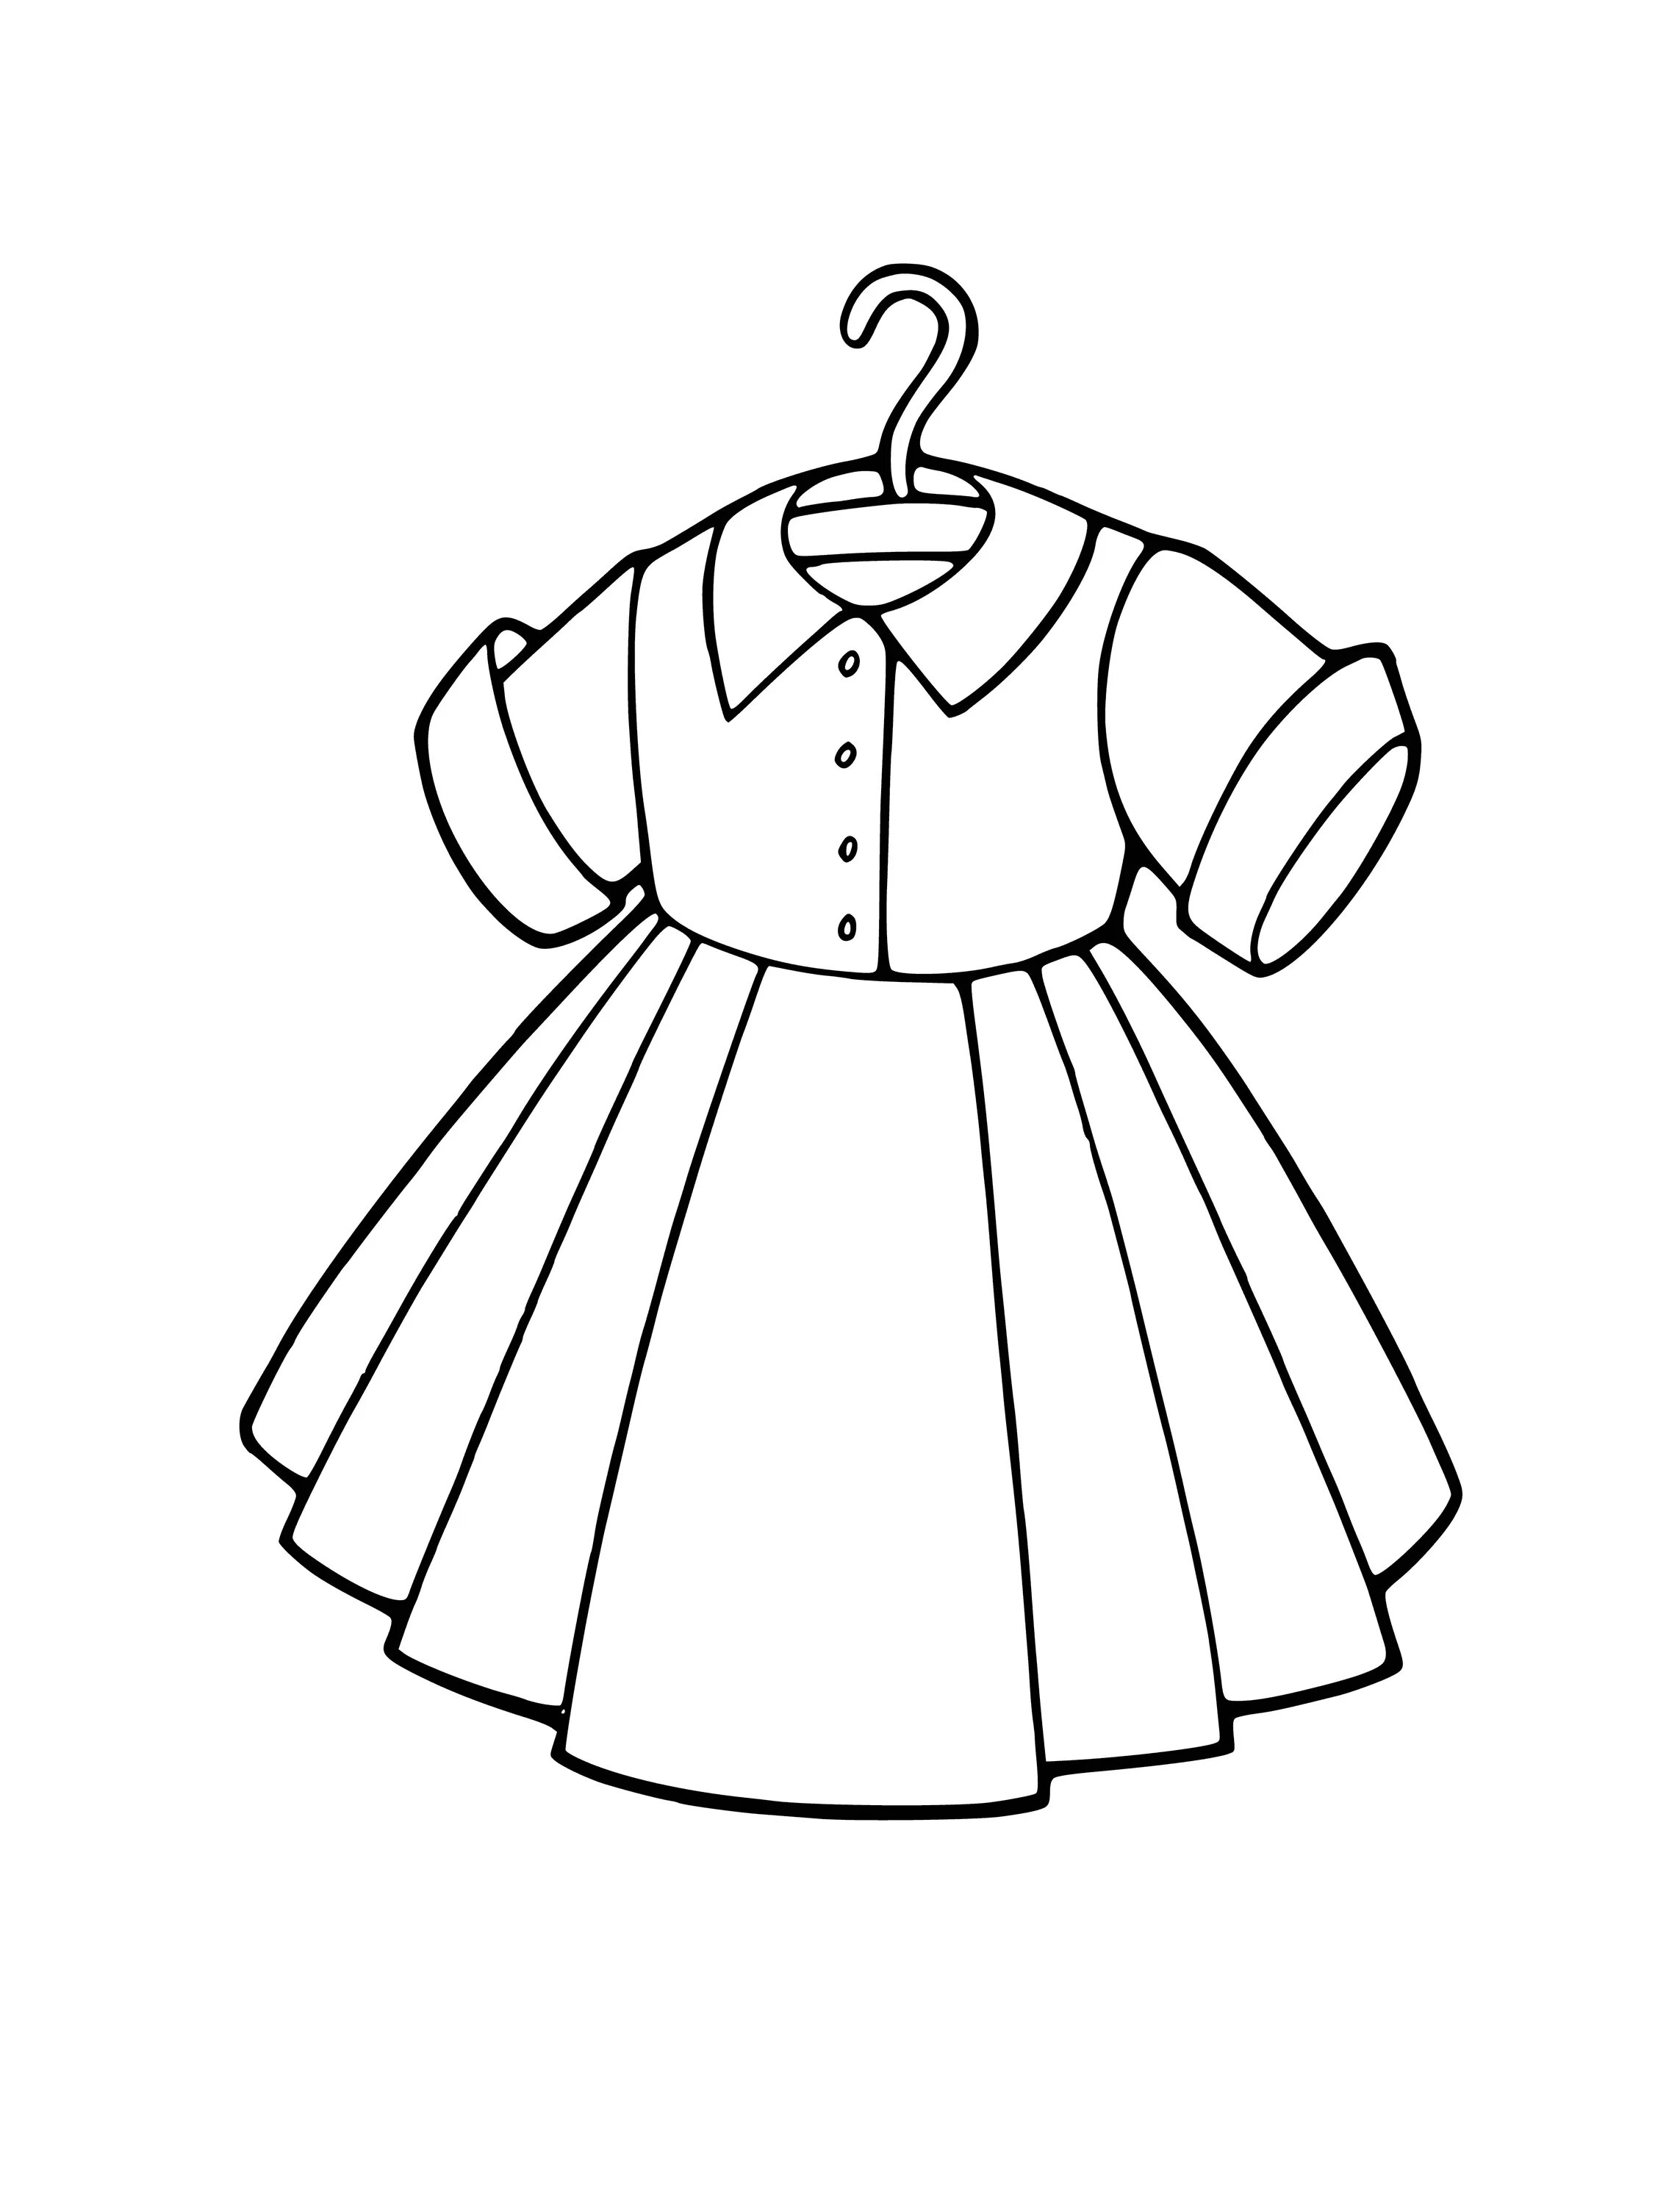 Clothing dress #2